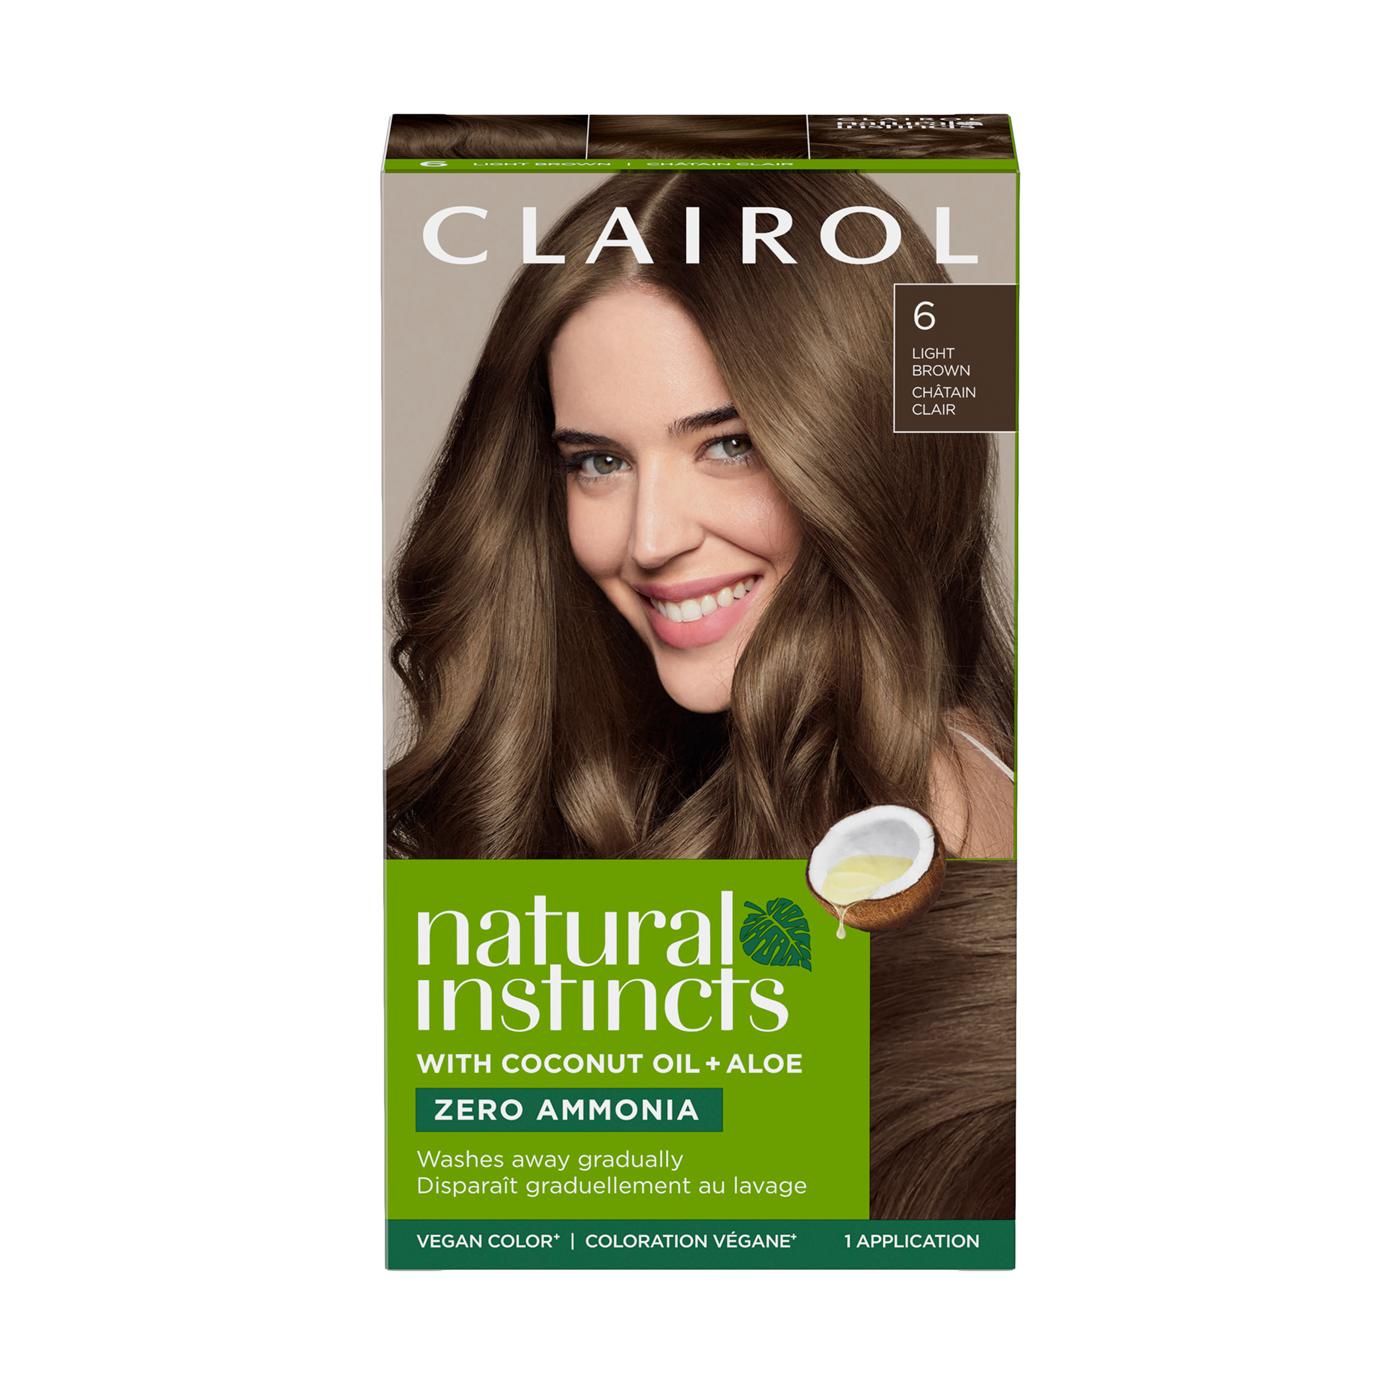 Clairol Natural Instincts Vegan Demi-Permanent Hair Color - 6 Light Brown; image 1 of 10